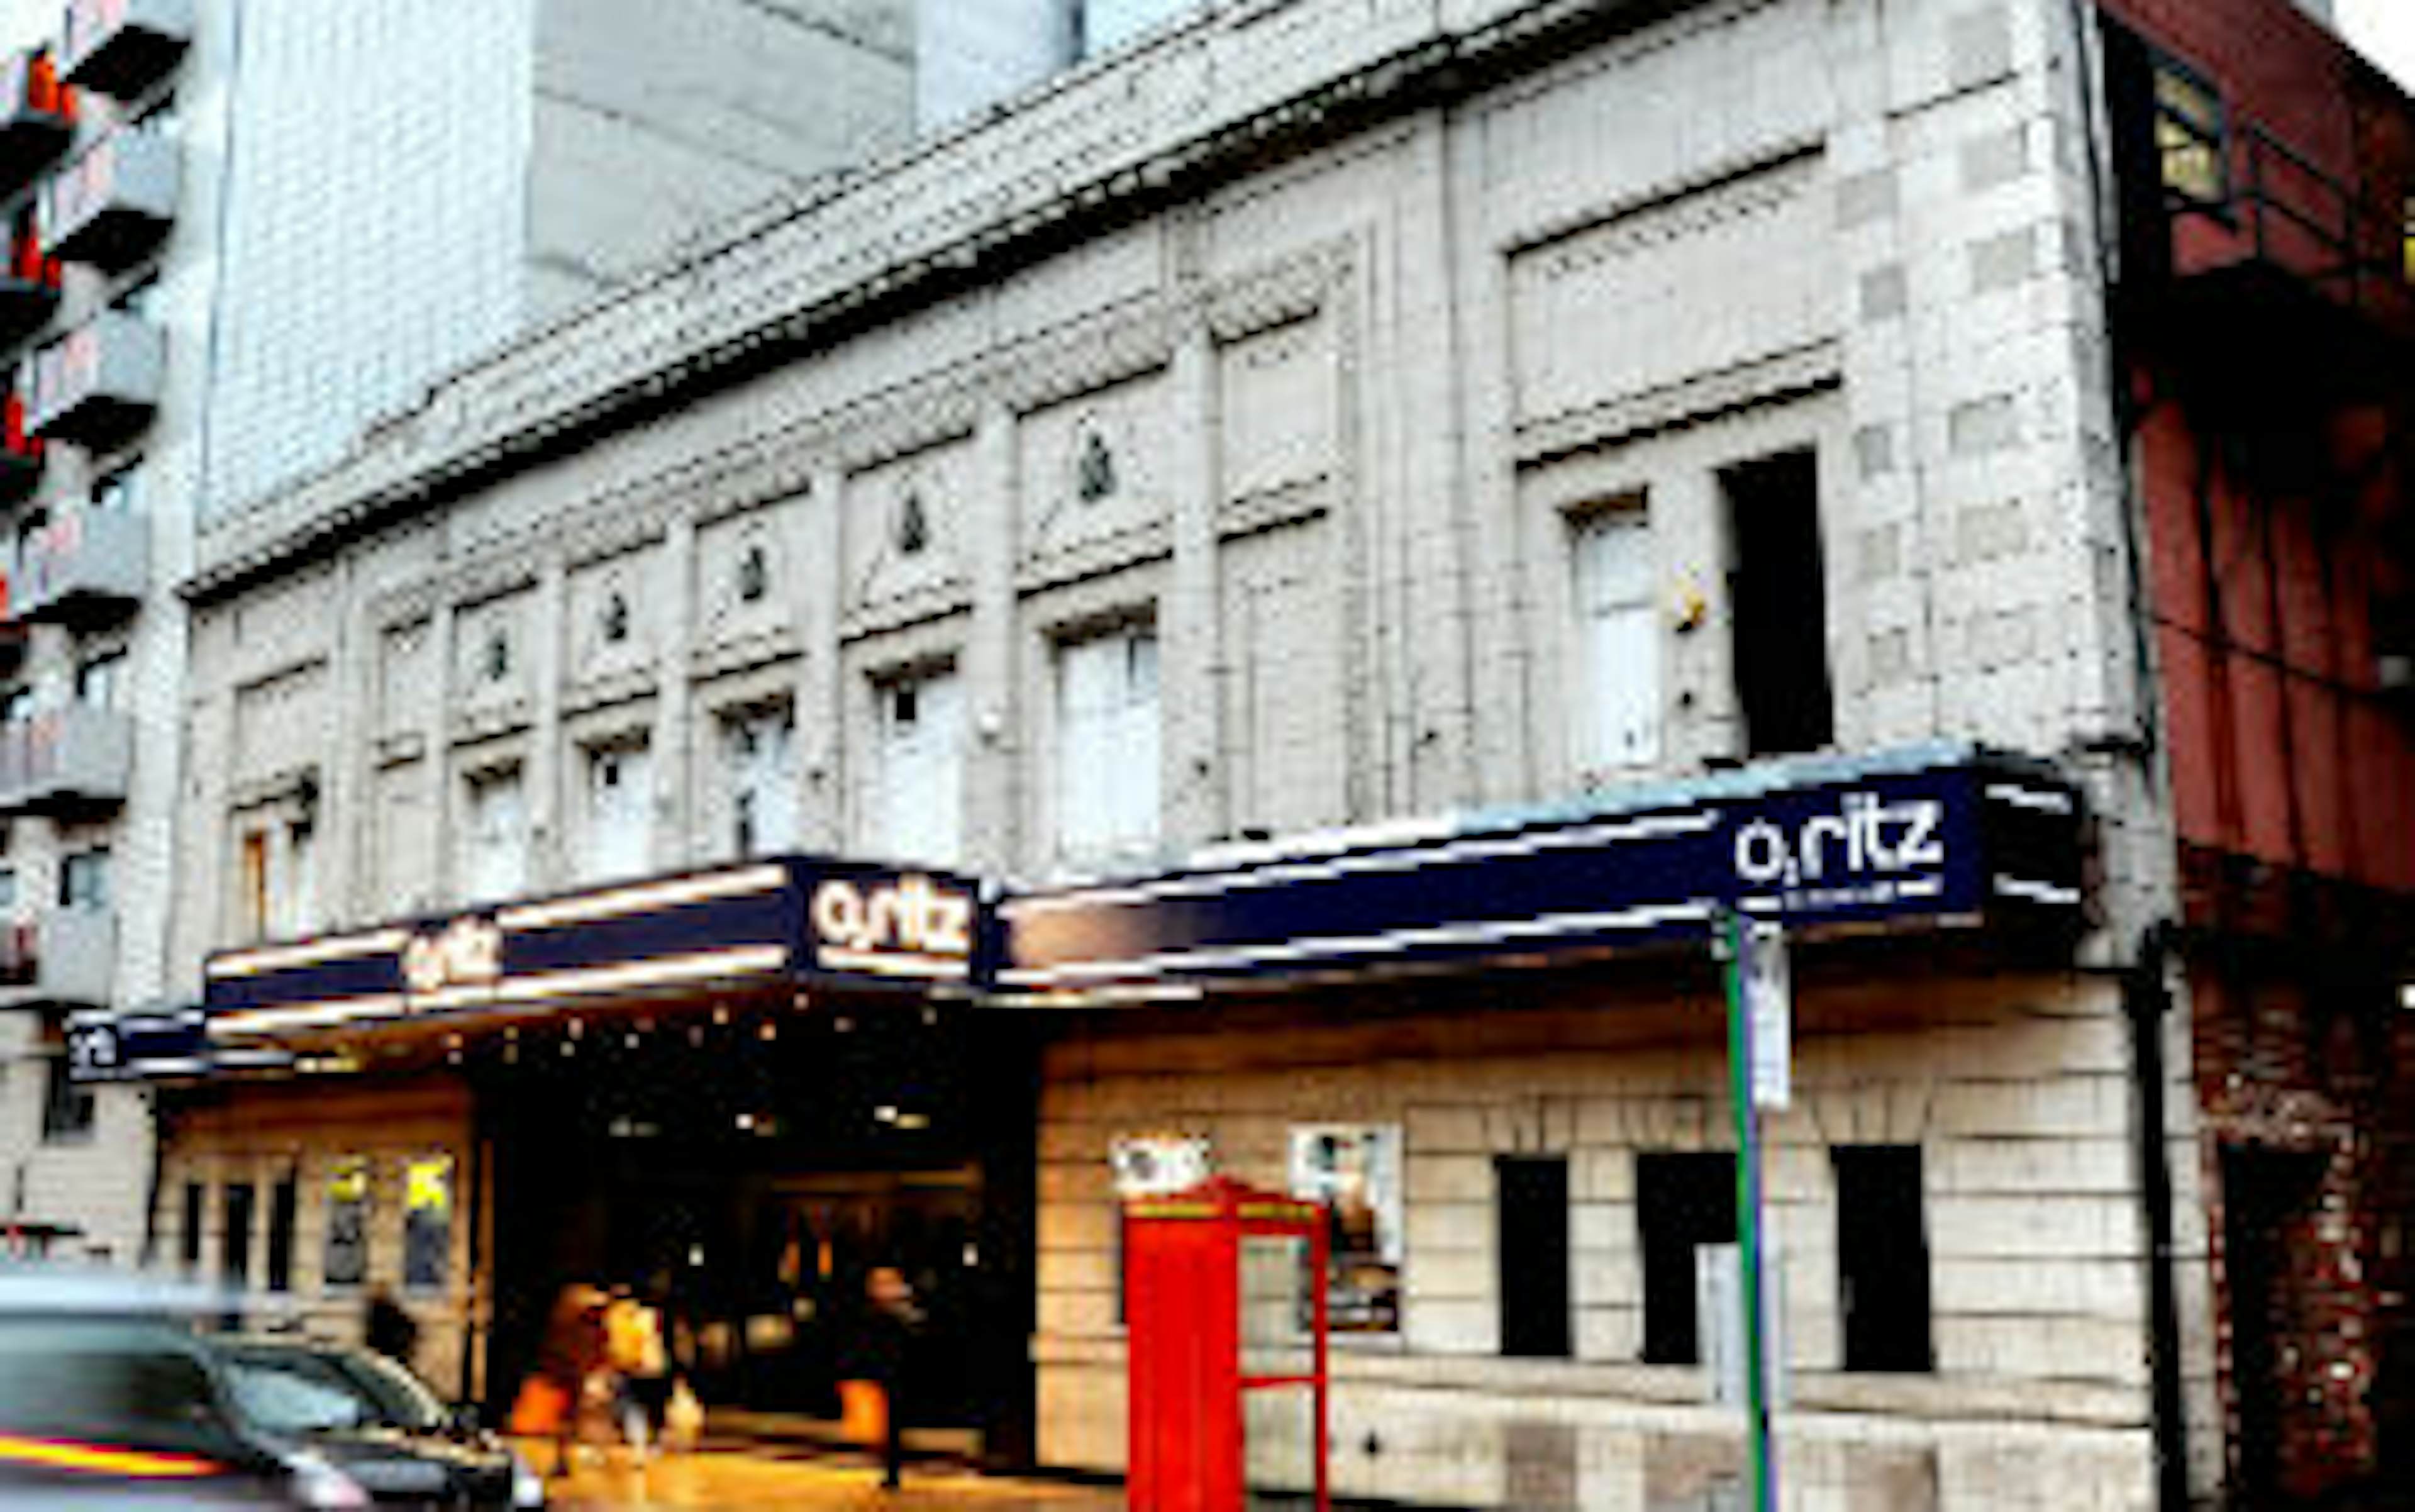 O2 Ritz Manchester - Whole Venue image 1